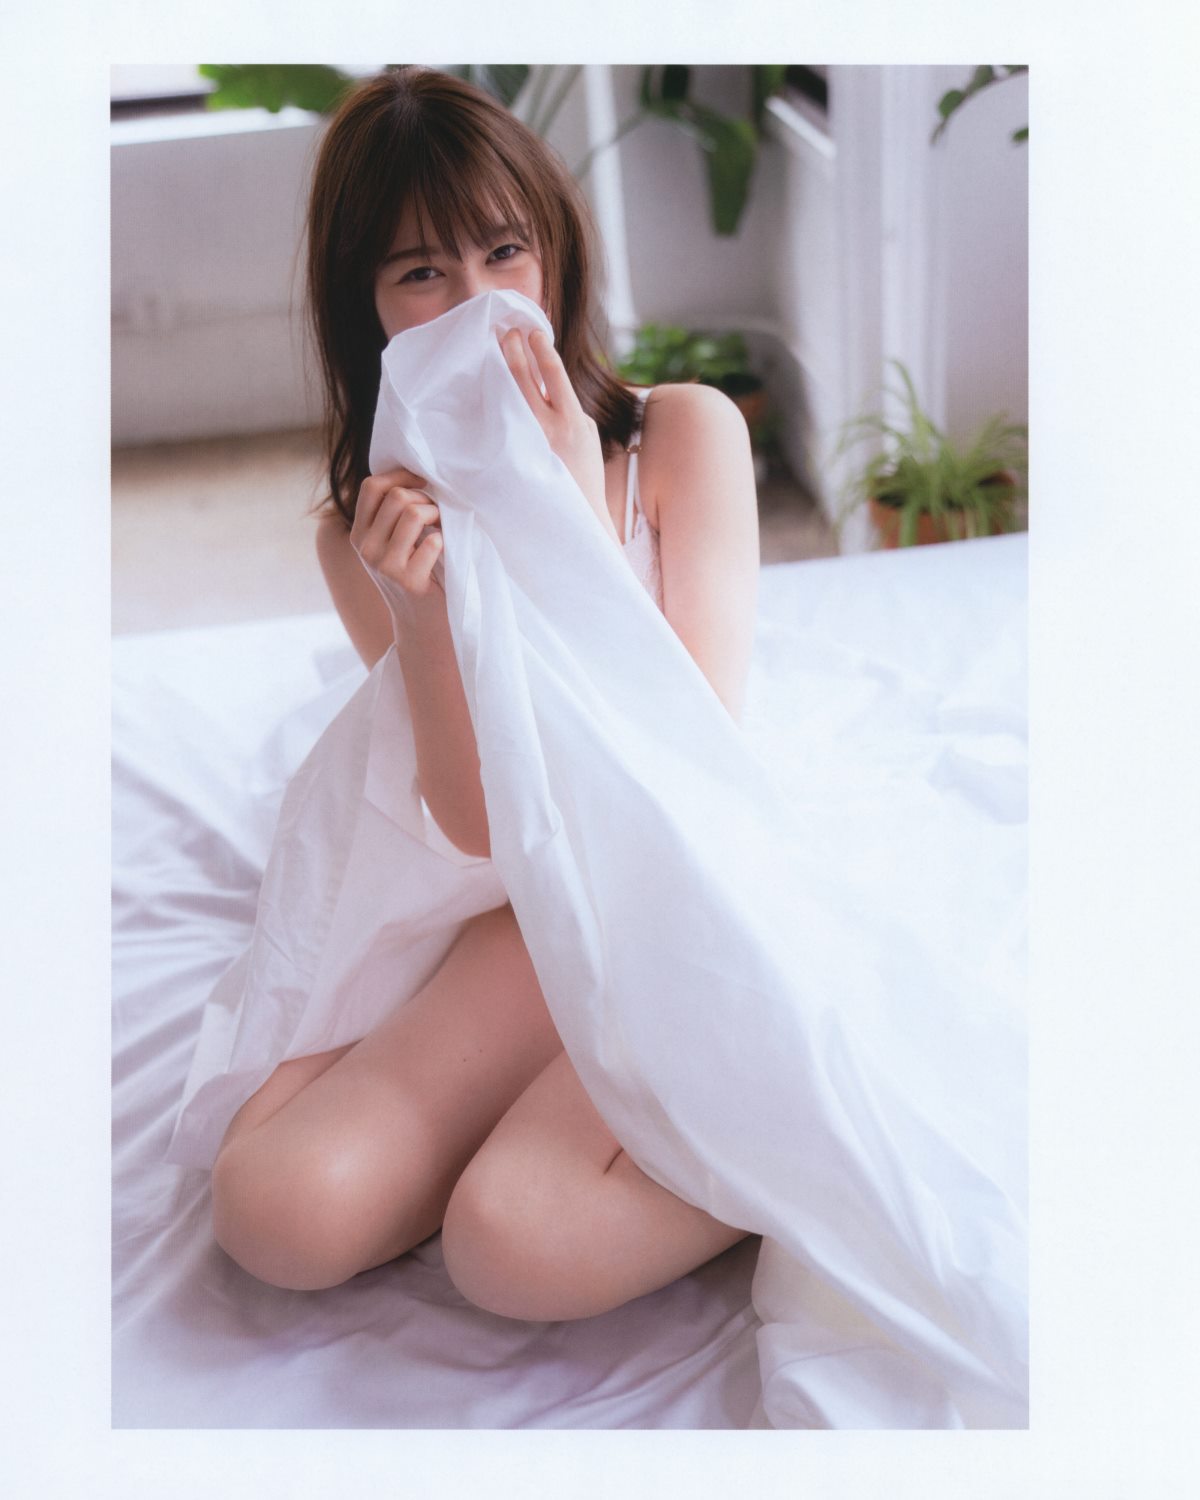 Photobook Ikuta Erika 2nd Photobook Intermission Nogizaka46 Bonus Postcard 生田絵梨花写真集 インターミッション 0092 1728100611.jpg